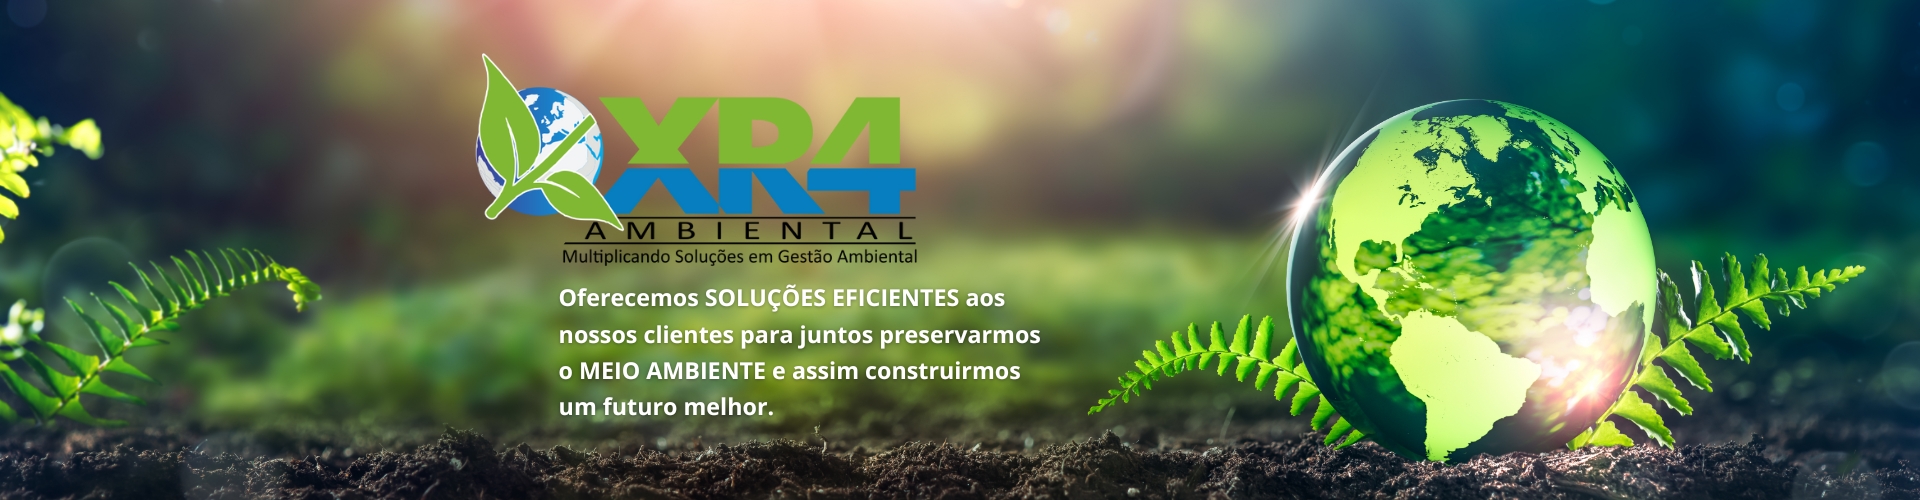 banner institucional XR4 ambiental